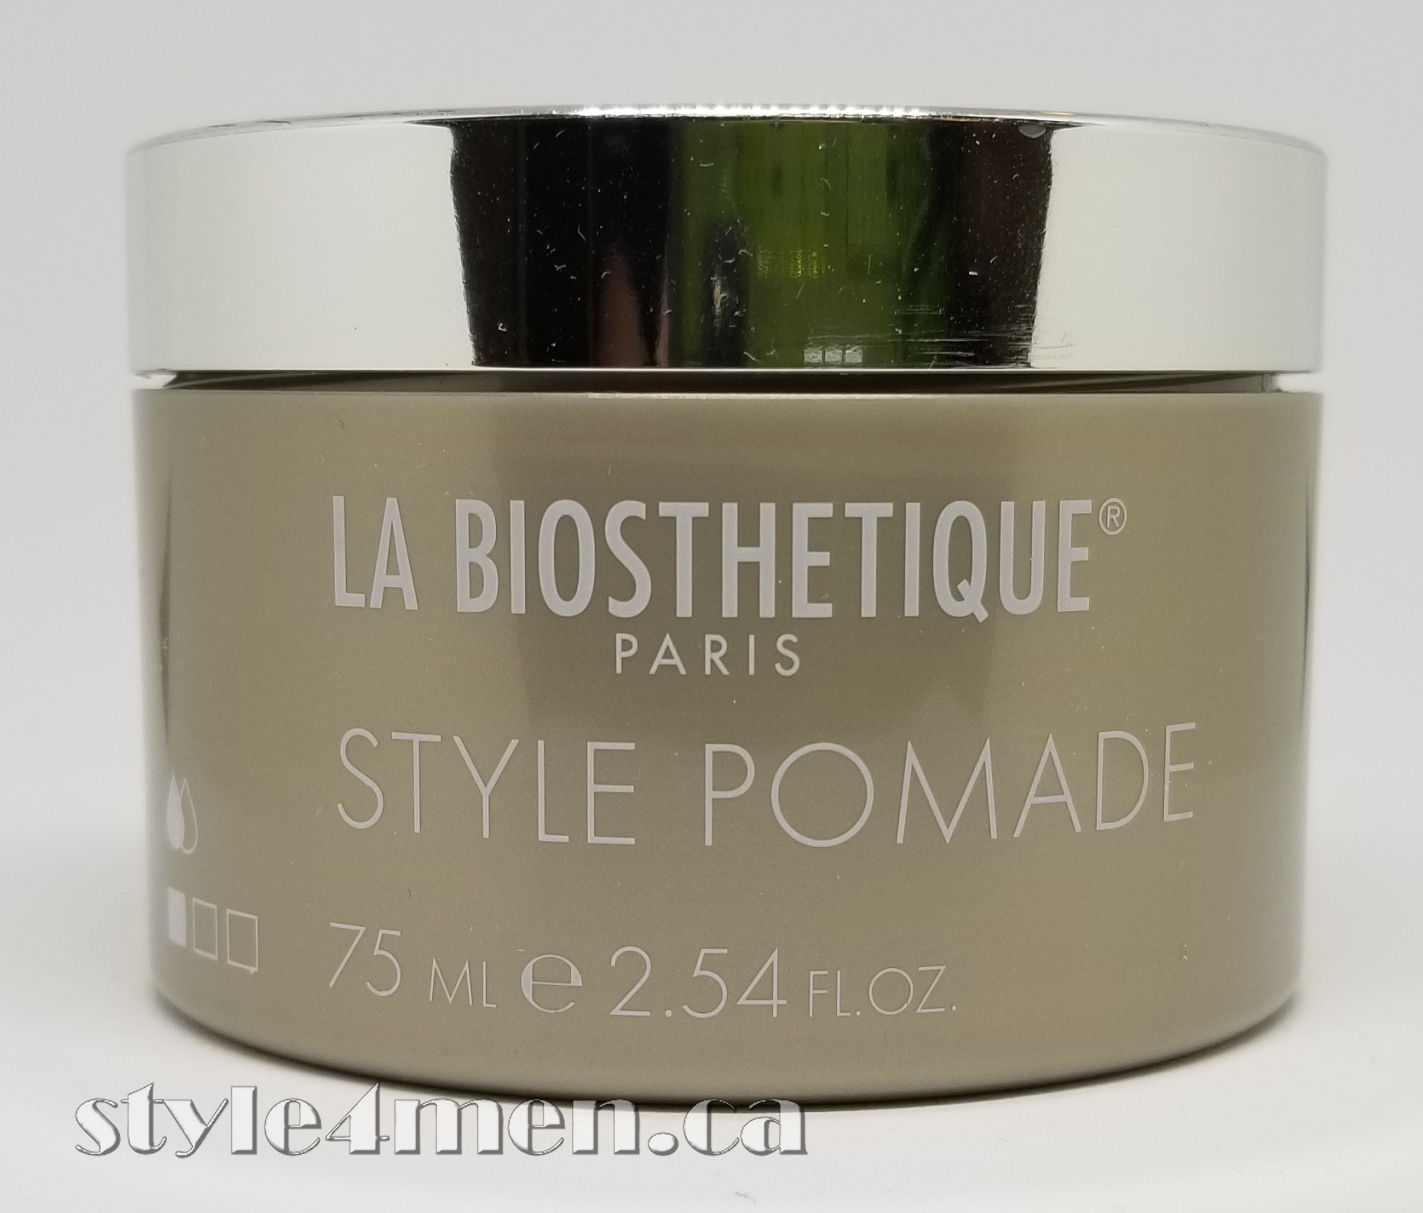 La Biosthetique Style Pomade – A Classic High Shine Pomade